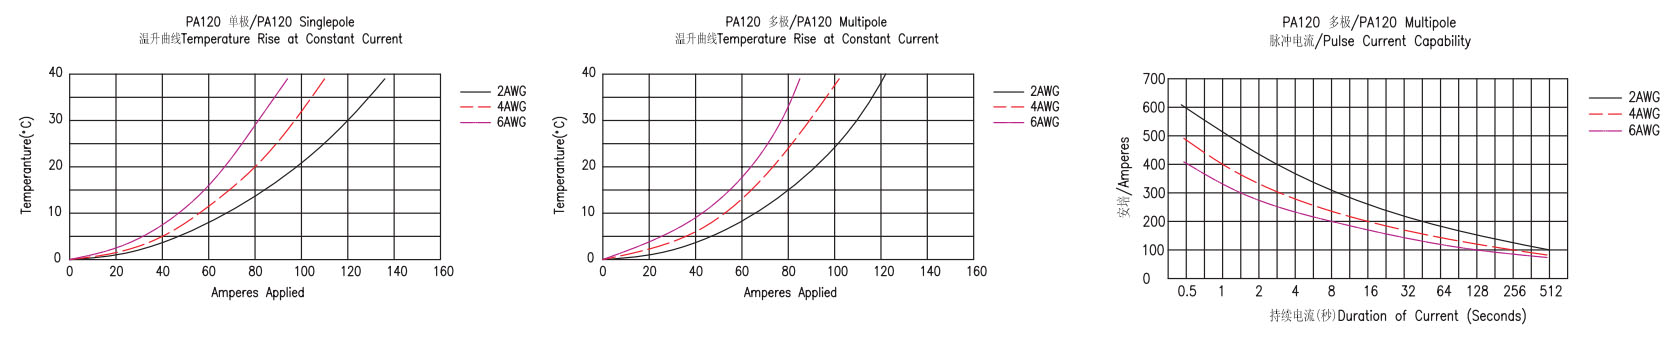 पॉवर कनेक्टर PA120-5 चे संयोजन